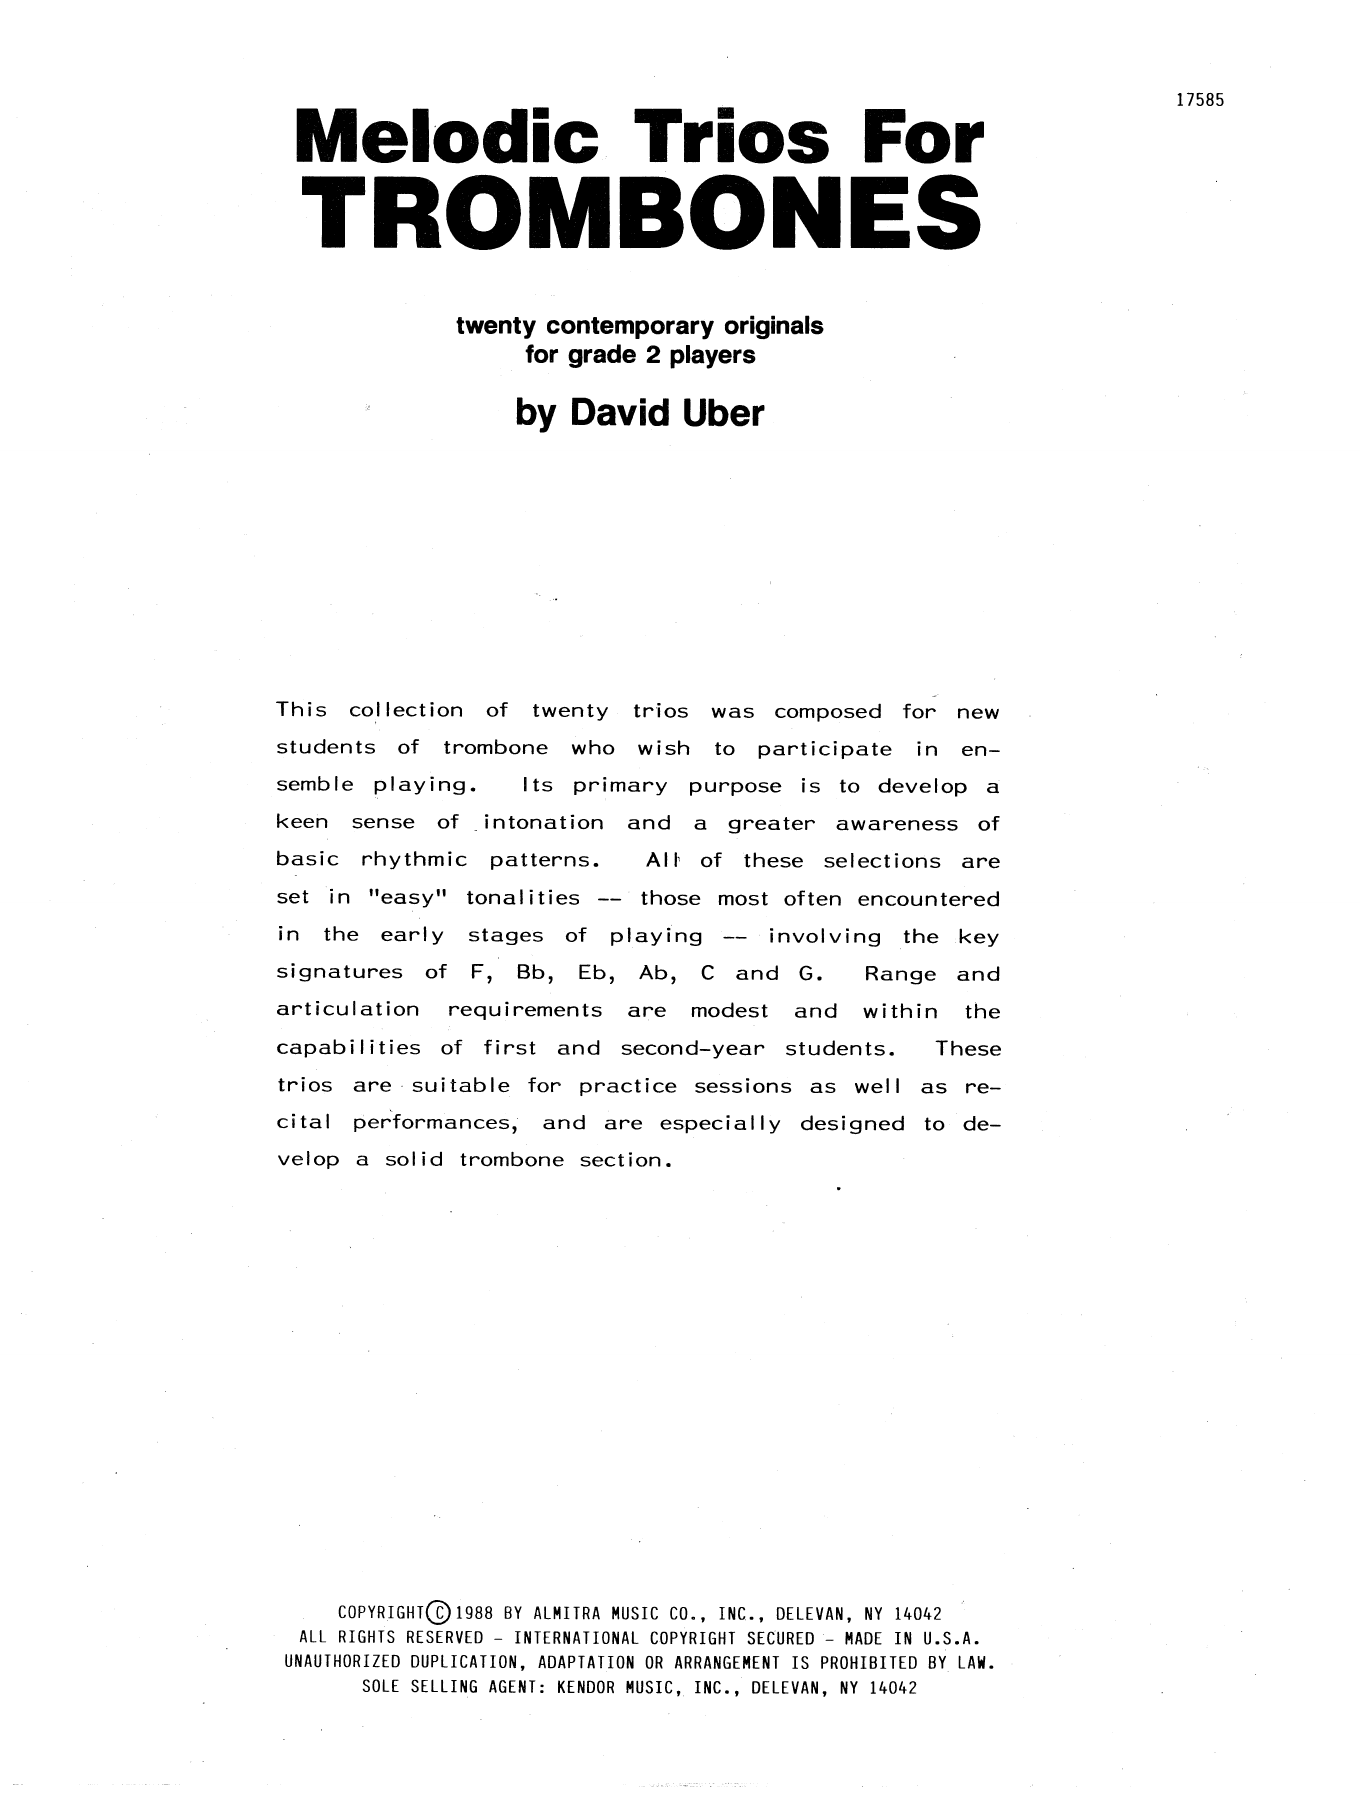 Download David Uber Melodic Trios For Trombones Sheet Music